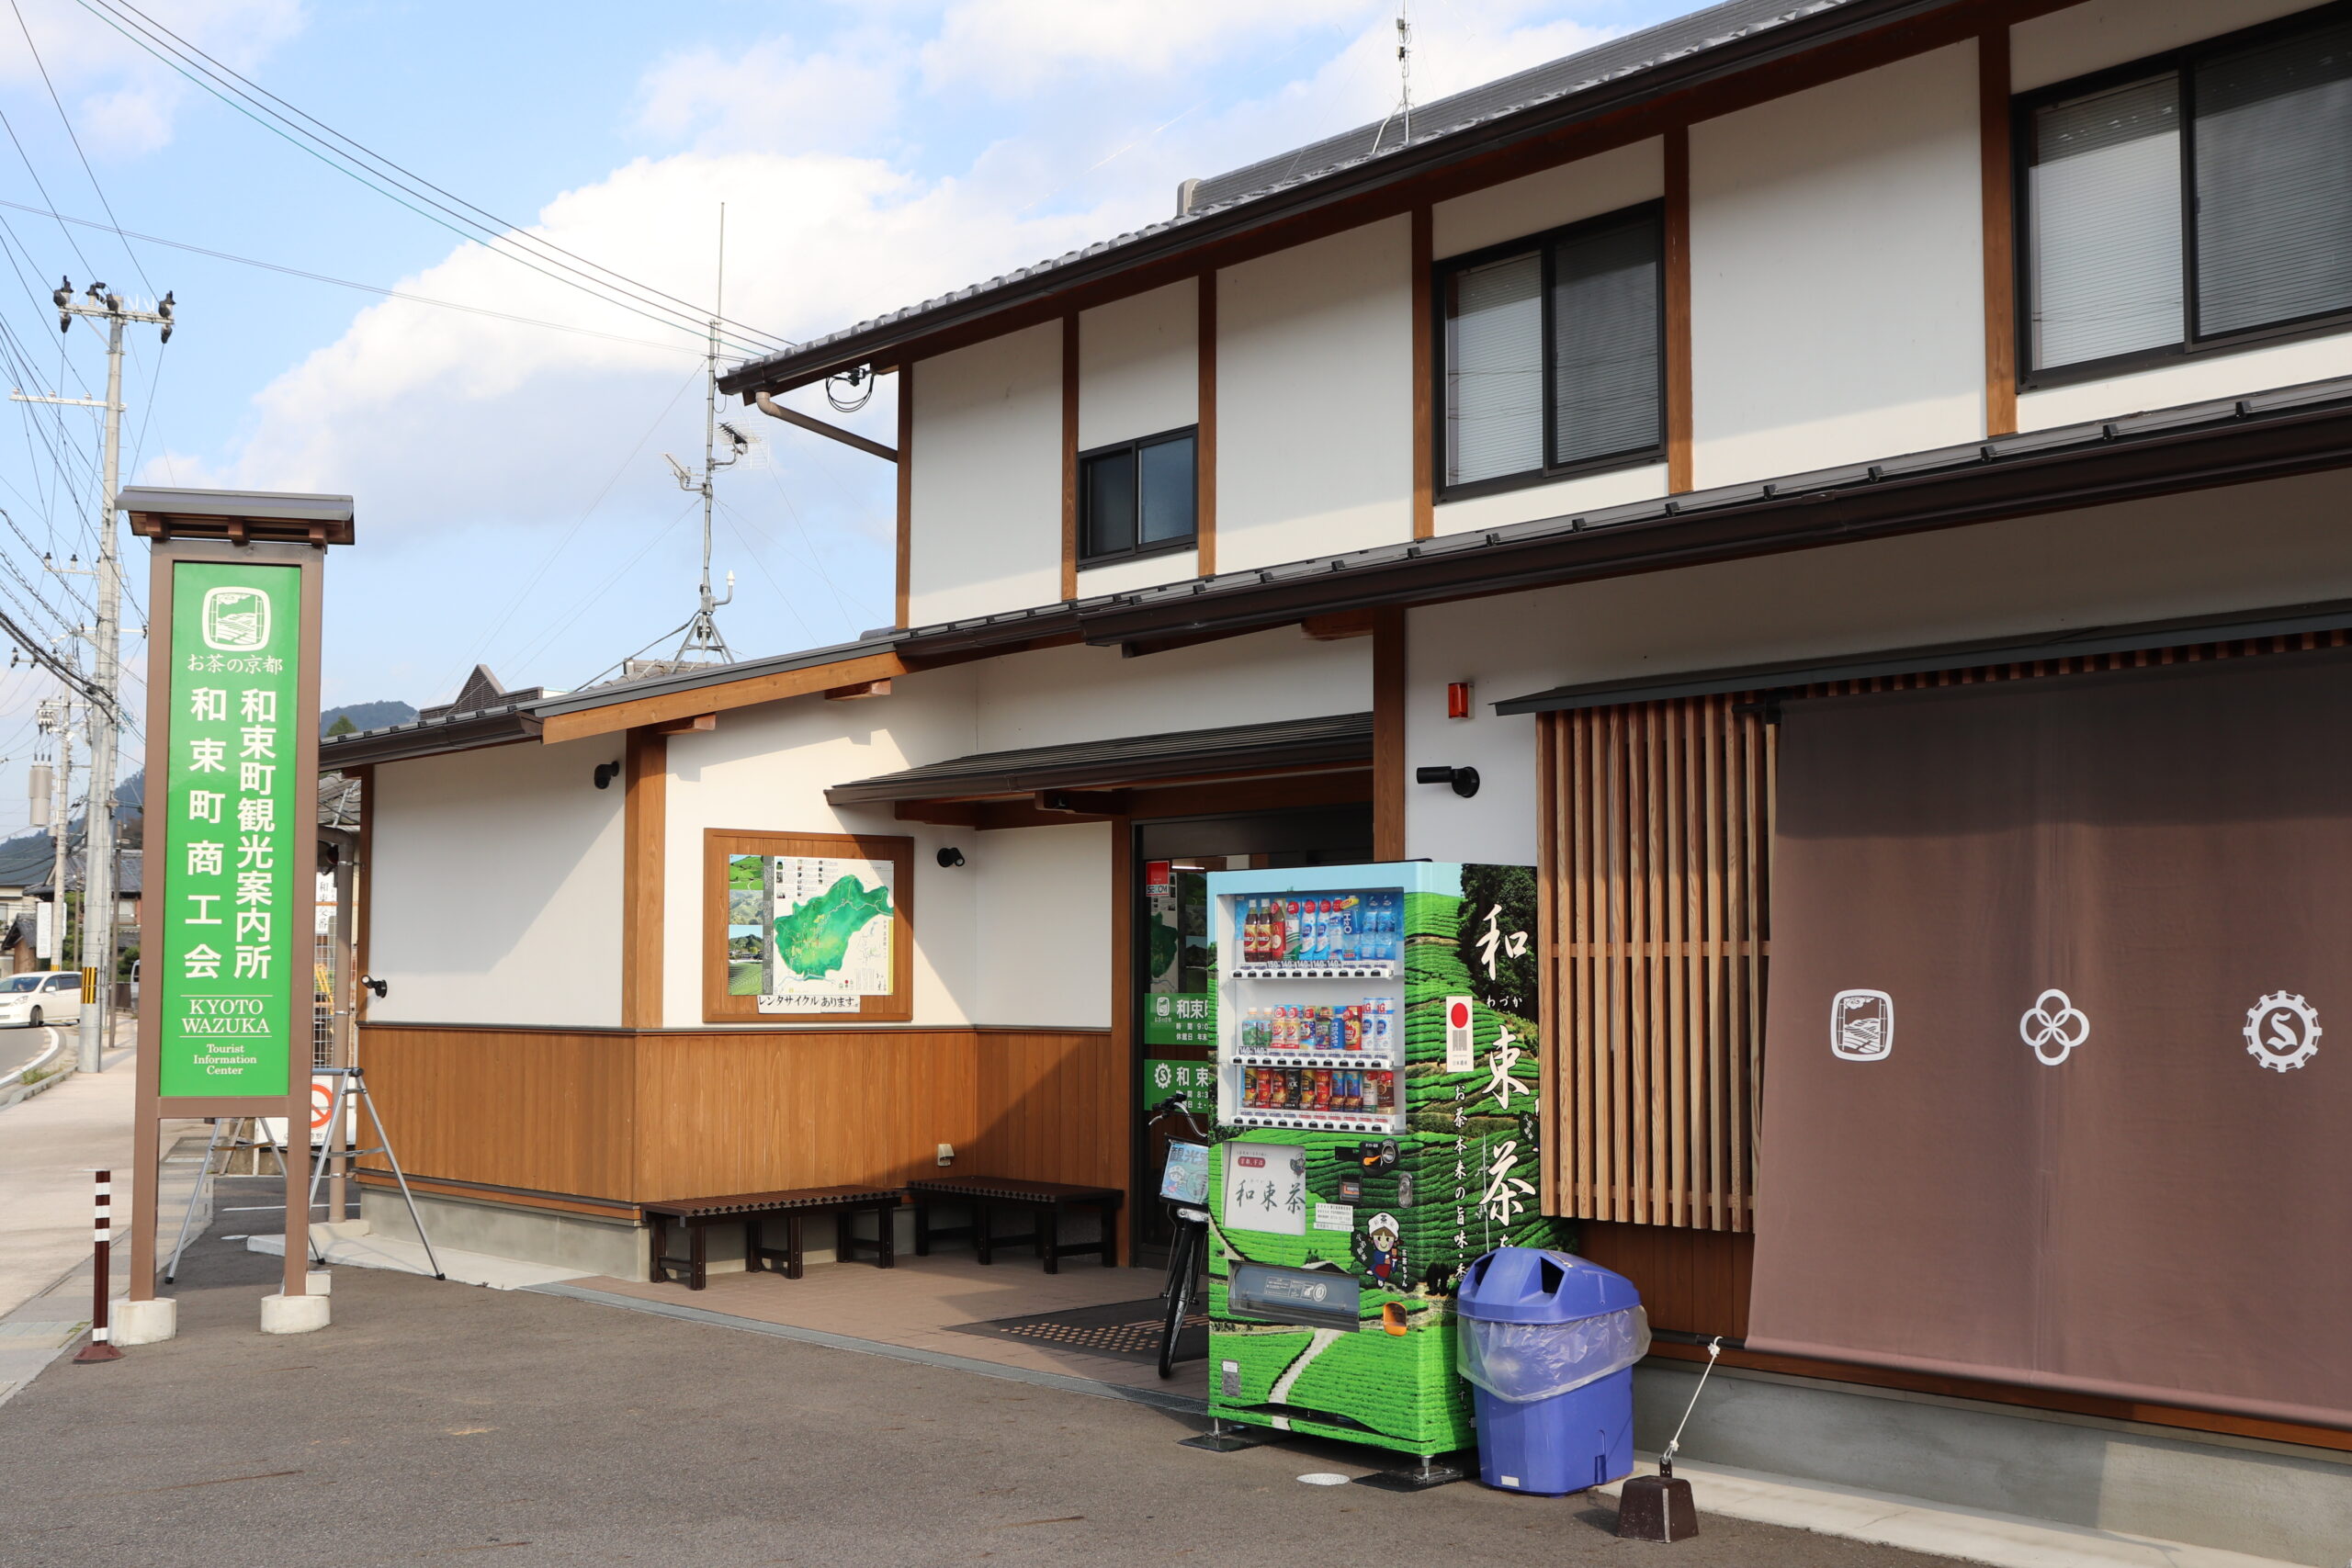 Wazuka-cho Tourist Information Center